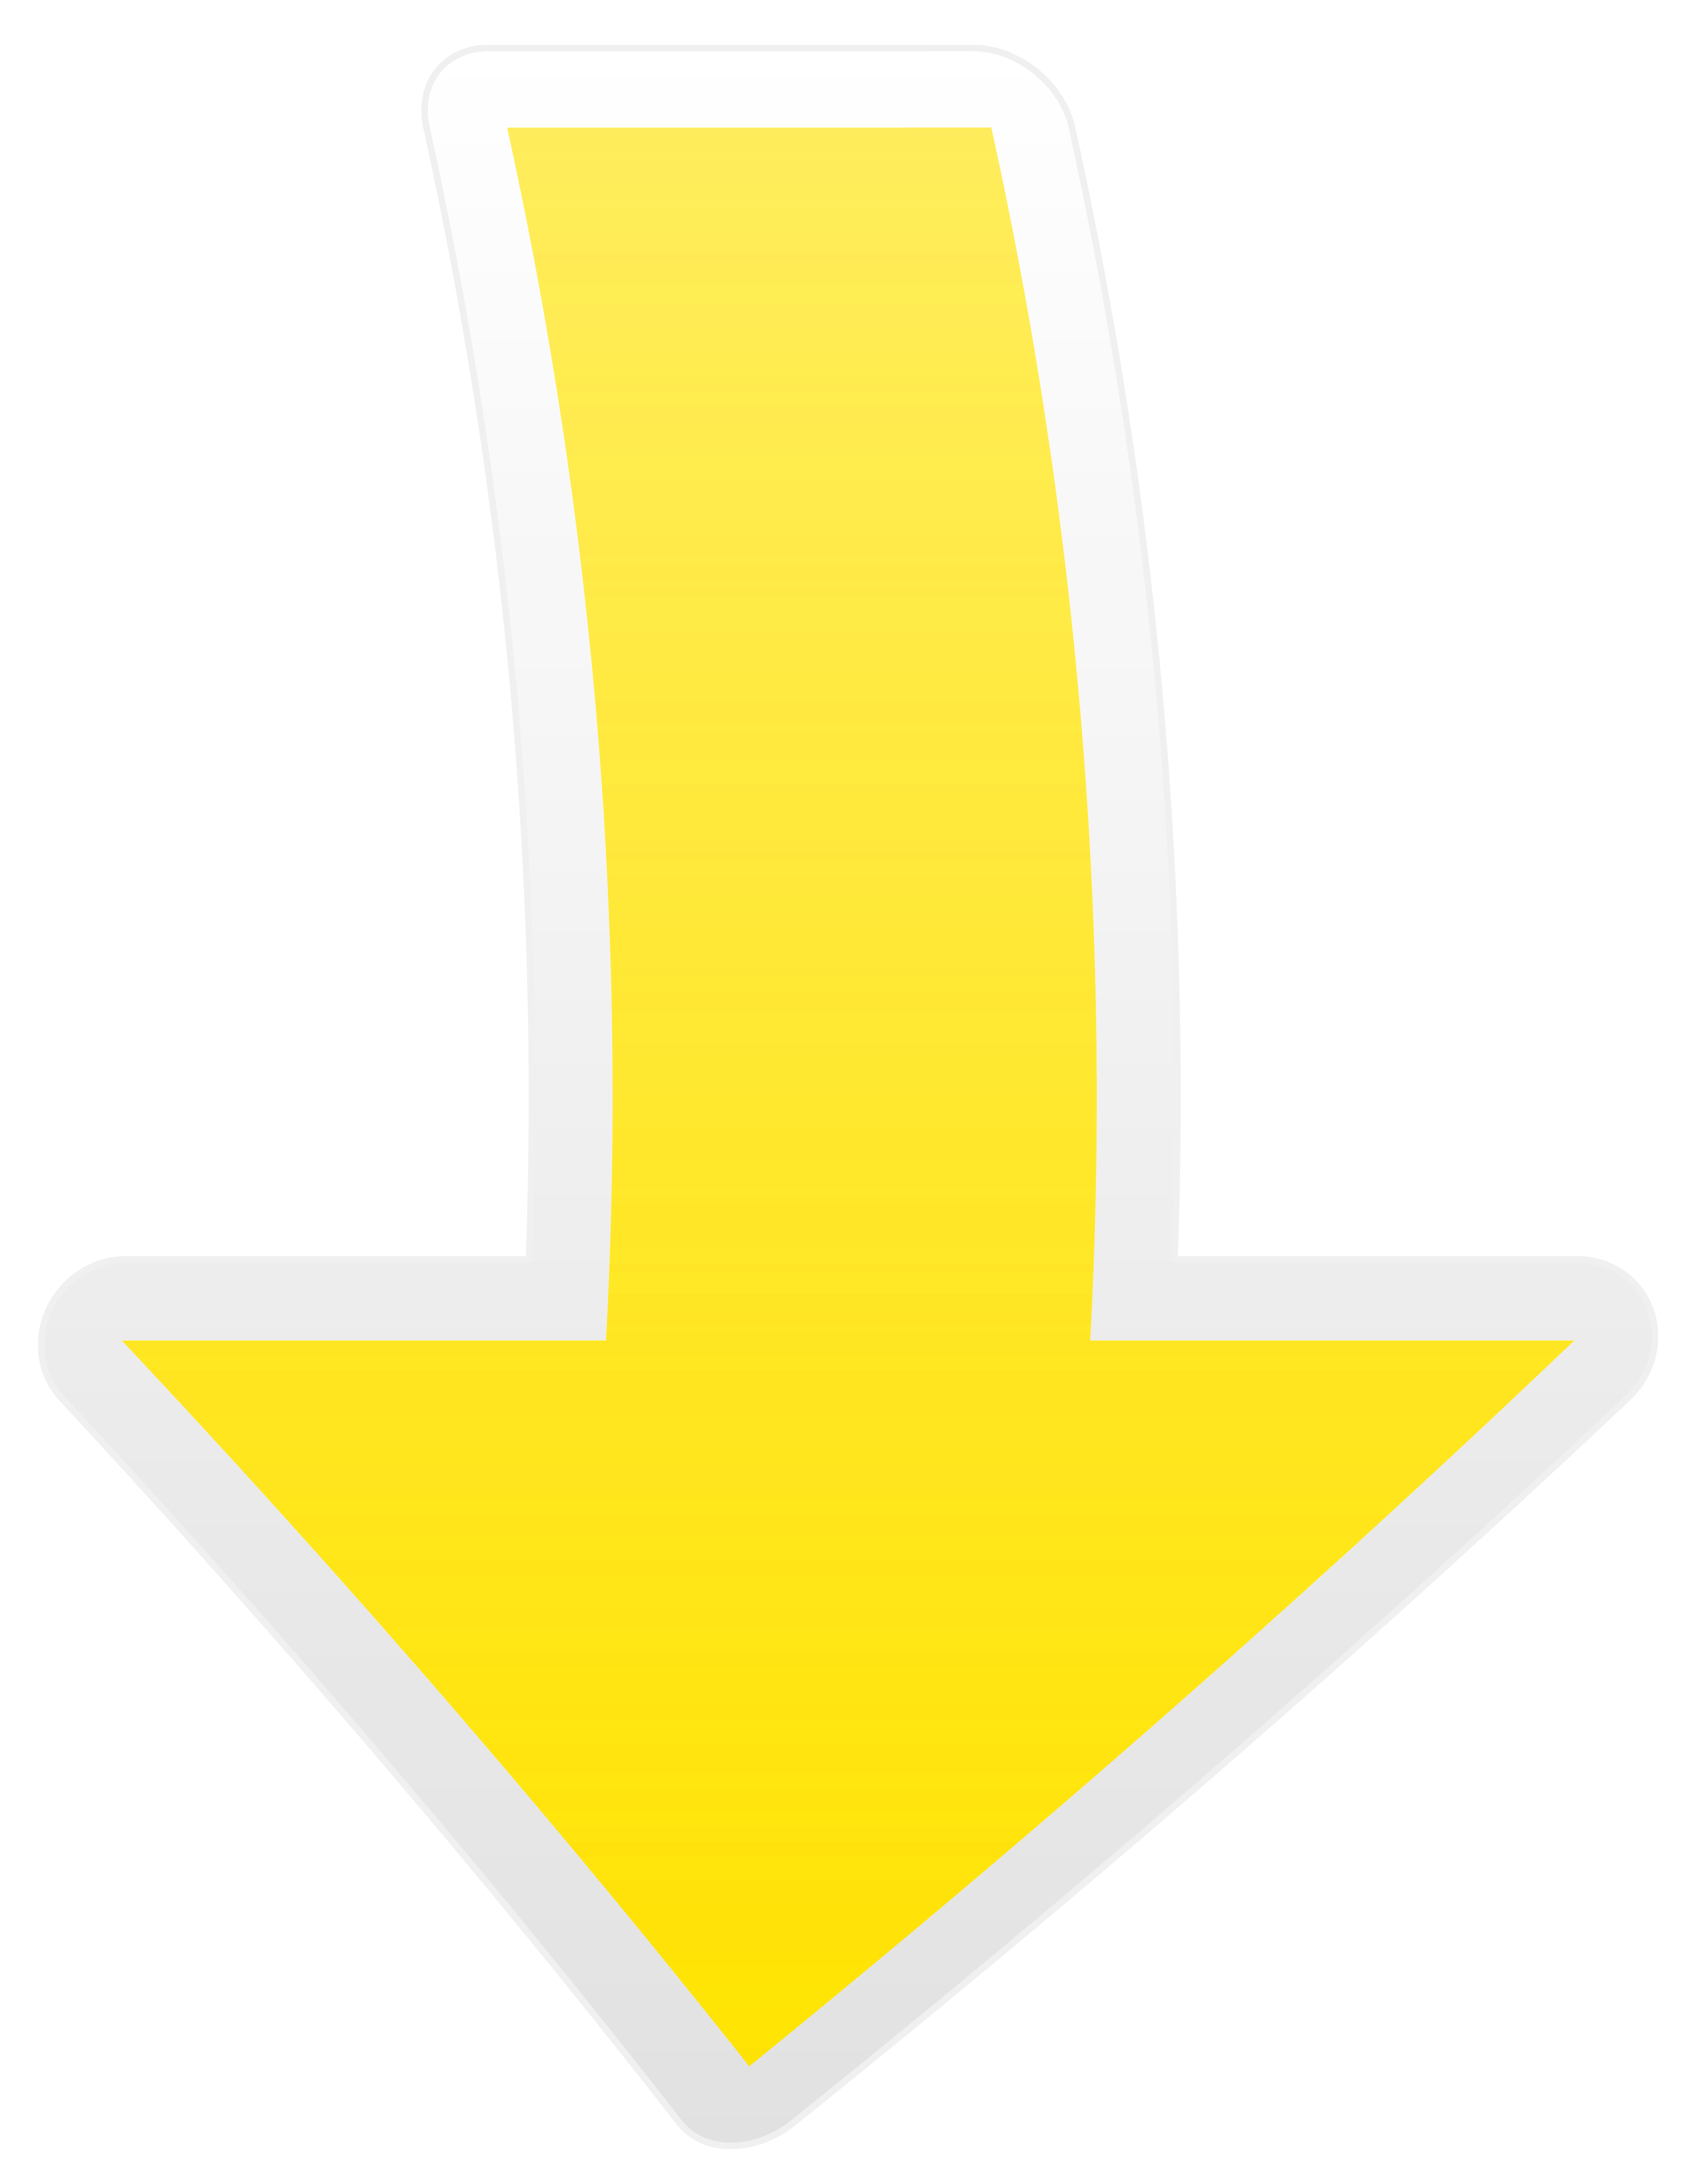 Yellow Arrow Down Transparent PNG Clip Art Image